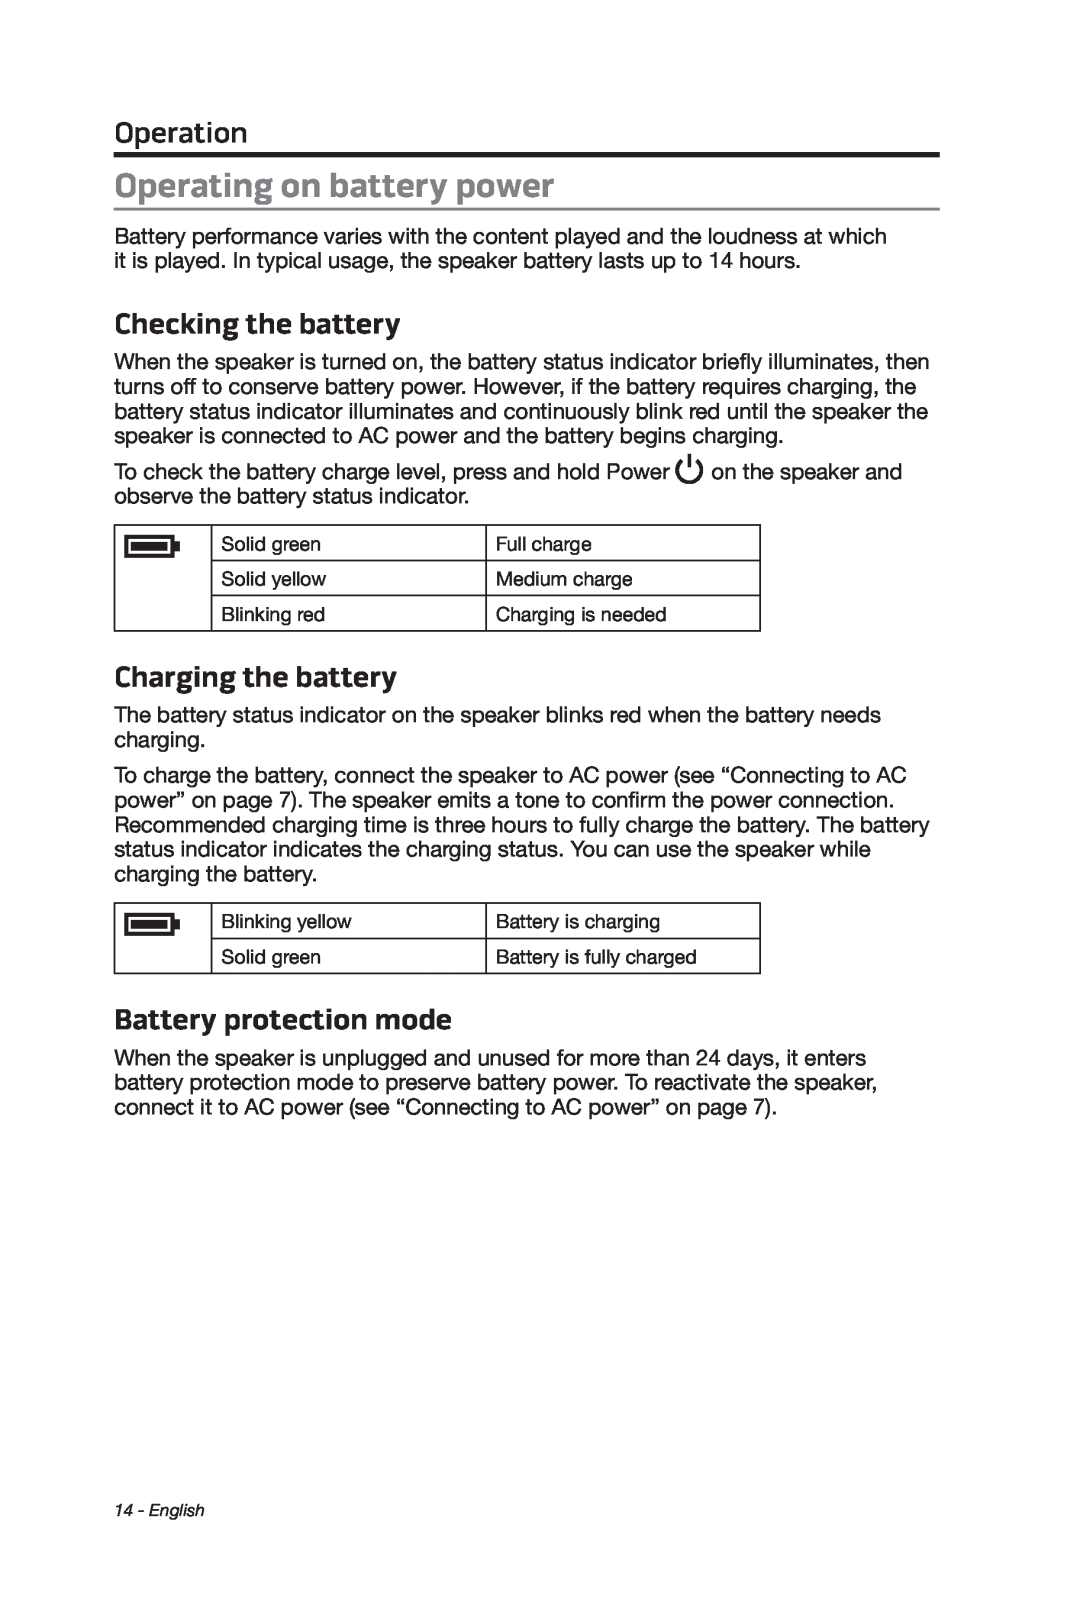 Bose 369946/1300 manual Operating on battery power, Checking the battery, Charging the battery, Battery protection mode 